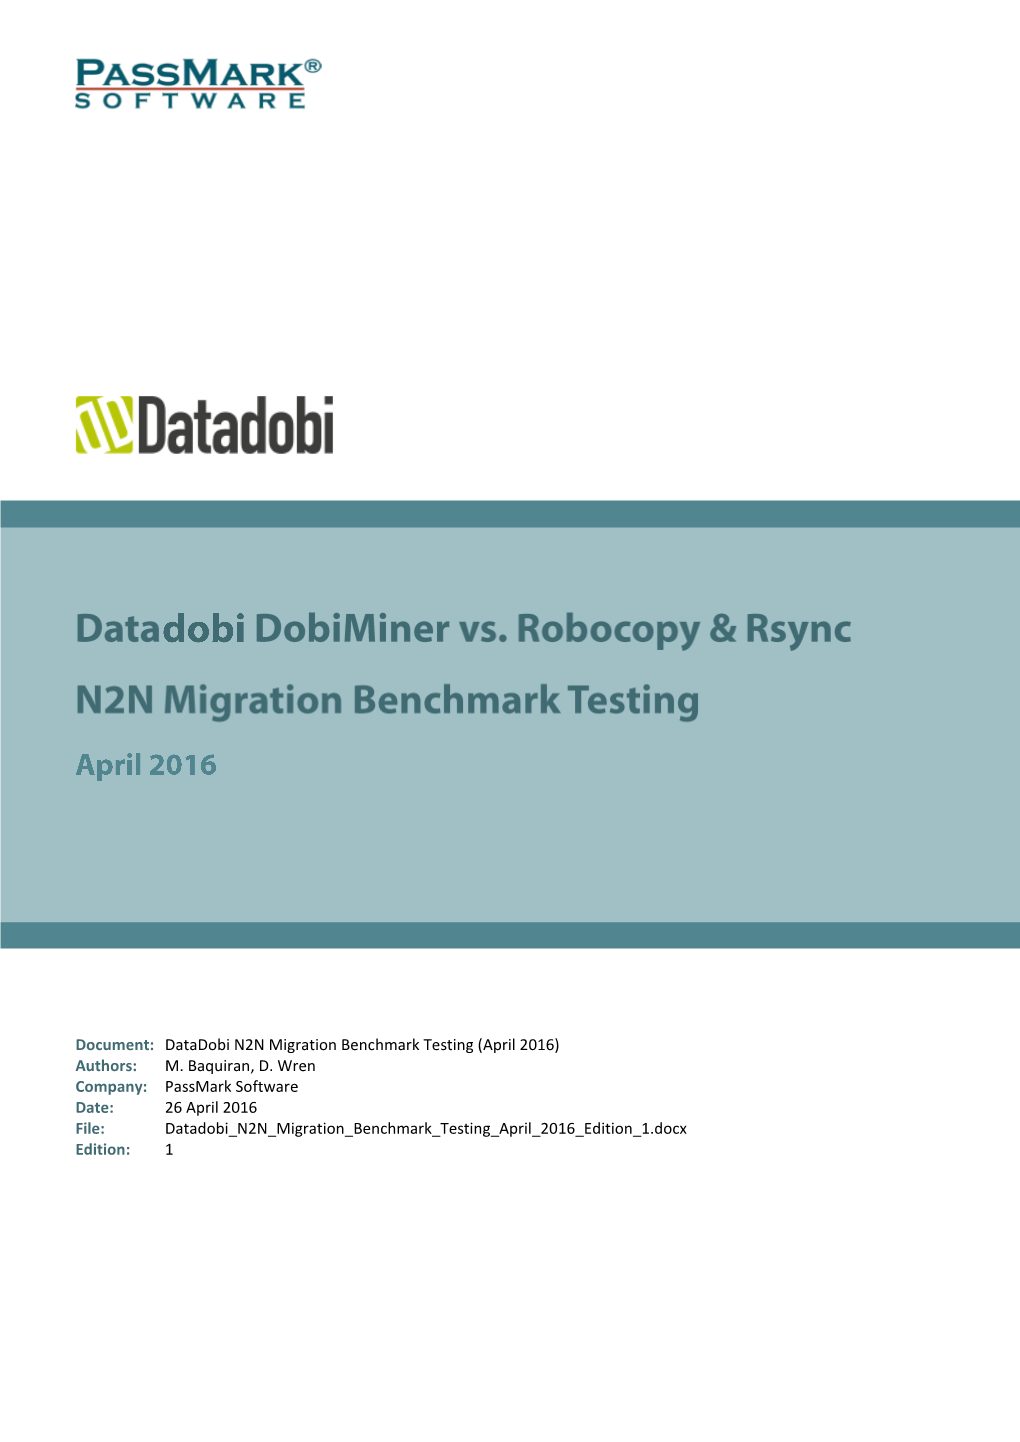 Document: Datadobi N2N Migration Benchmark Testing (April 2016) Authors: M